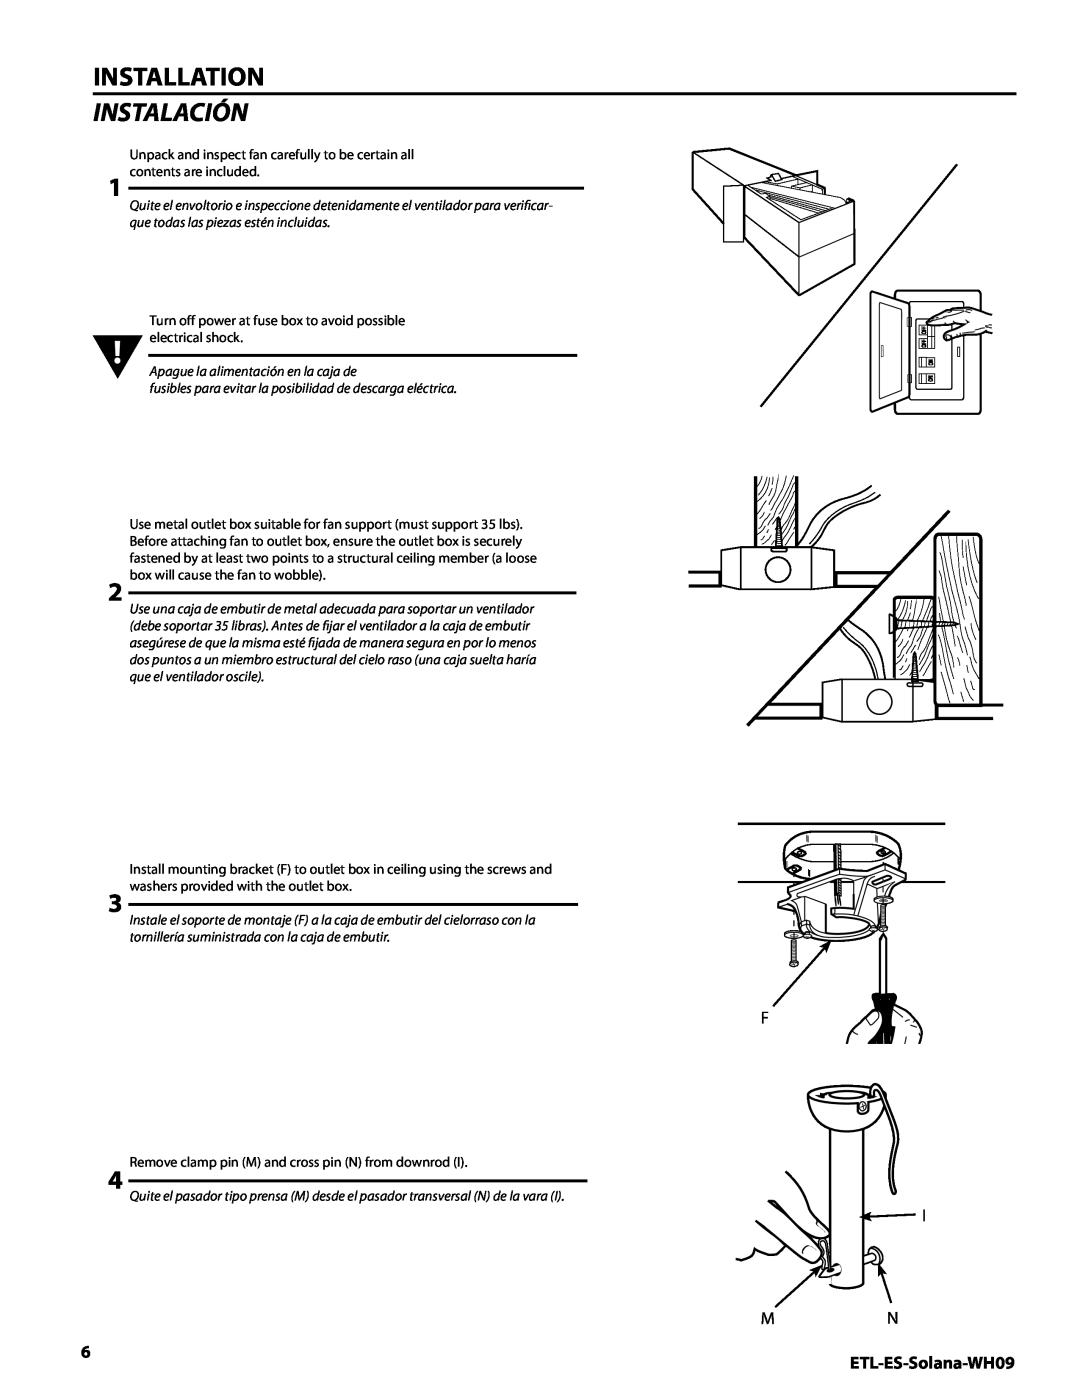 Westinghouse MR 72161 installation instructions Installation Instalación, ETL-ES-Solana-WH09 